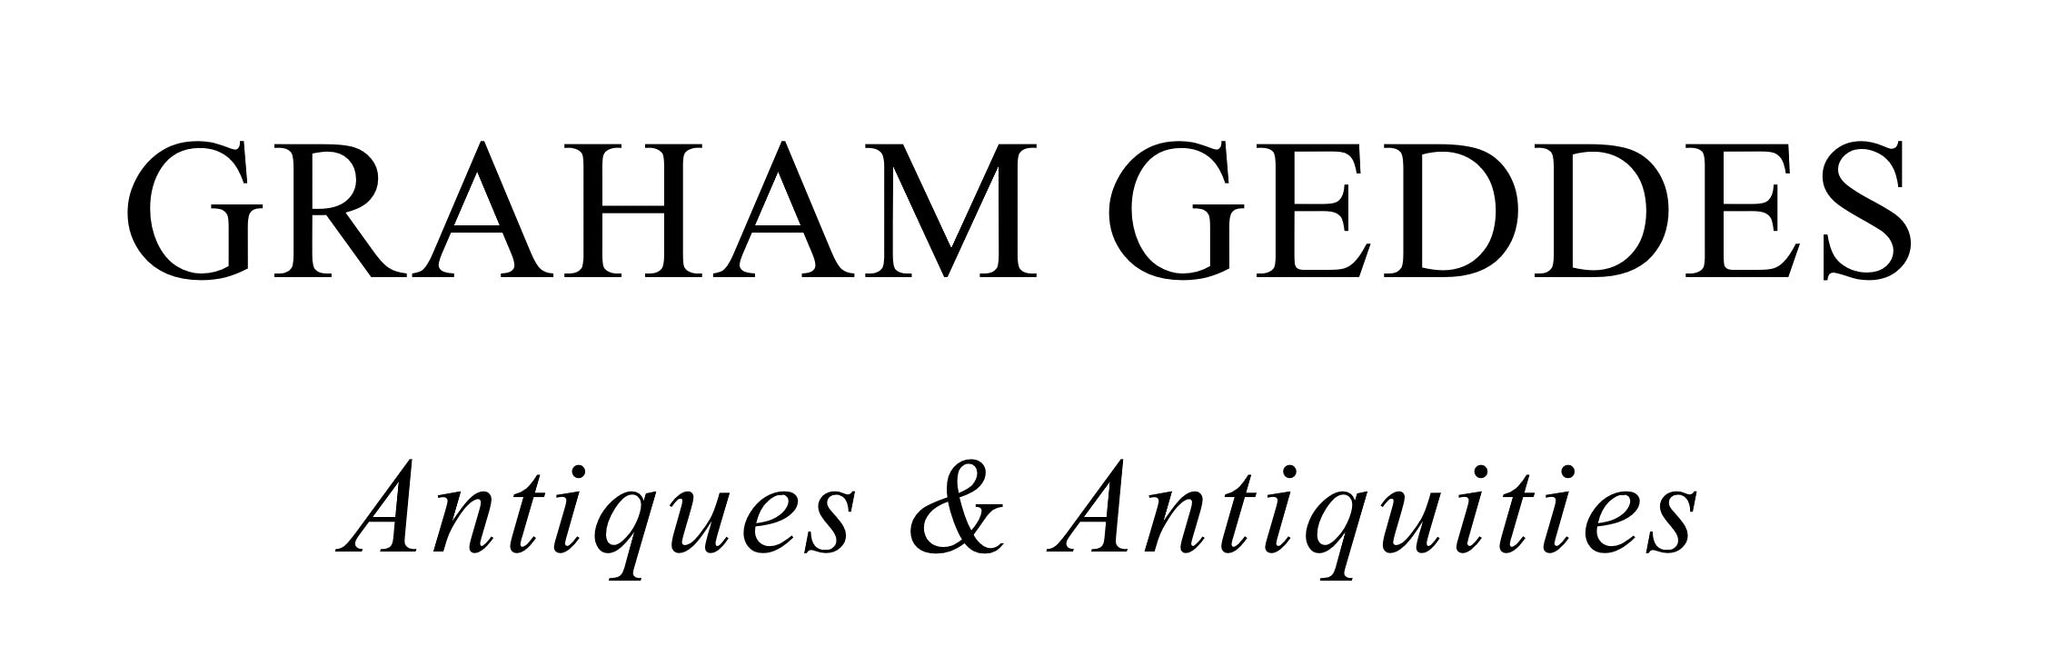 Graham Geddes Antiques & Antiquities 